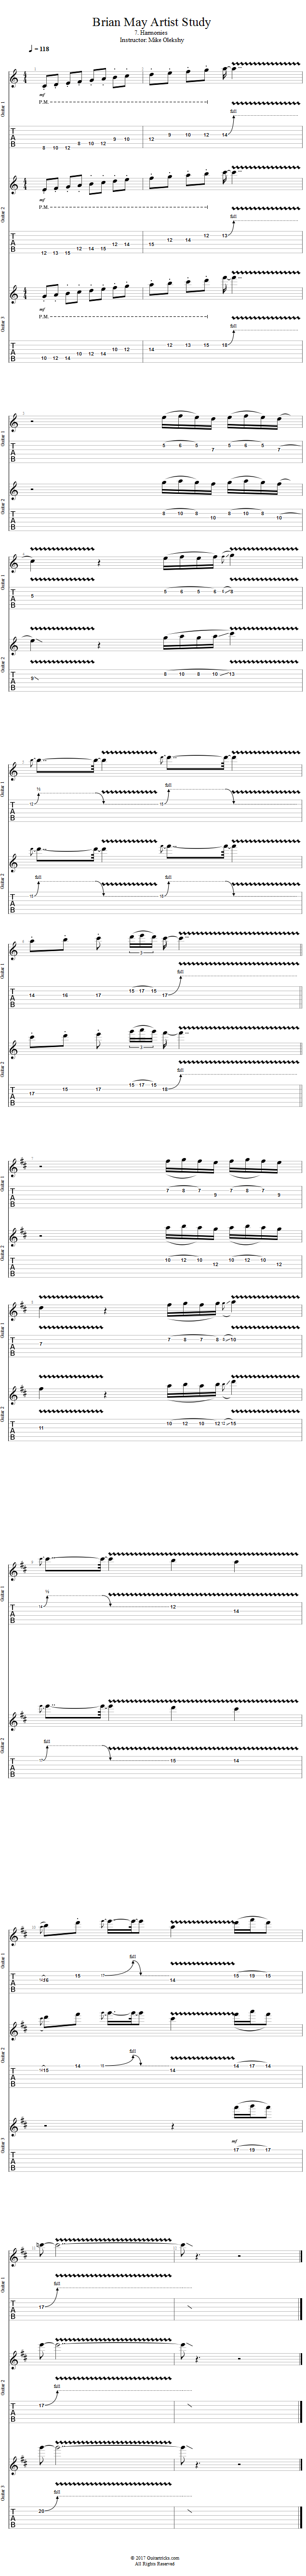 Harmonies song notation